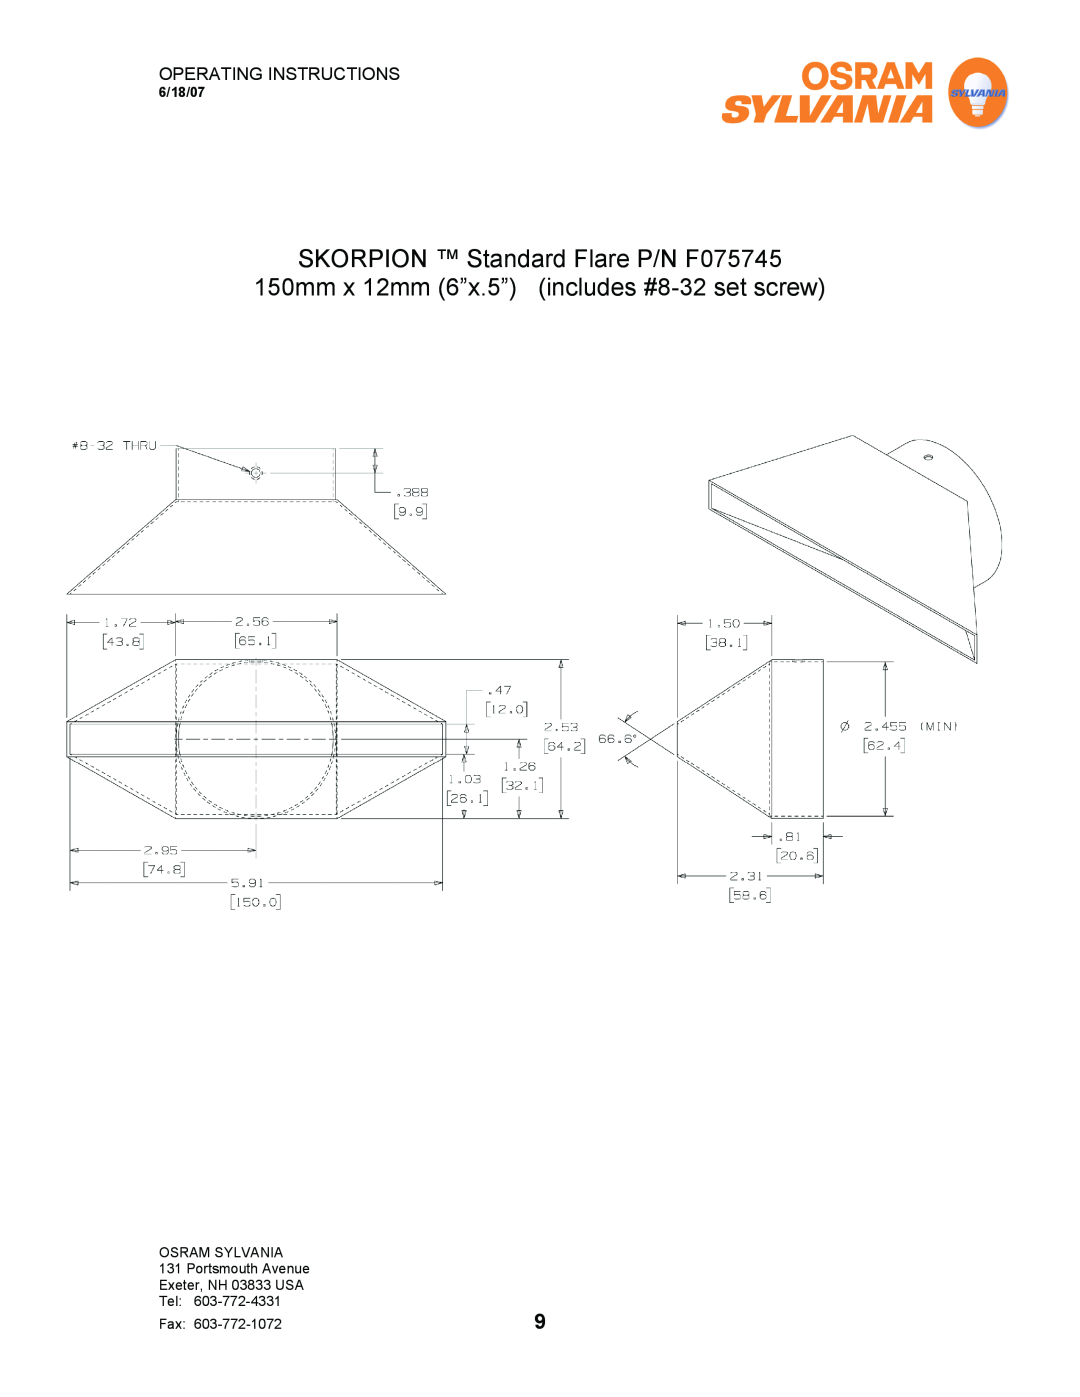 Sylvania F075615 SKORPION Standard Flare P/N F075745, 150mm x 12mm 6”x.5” includes #8-32set screw, Operating Instructions 